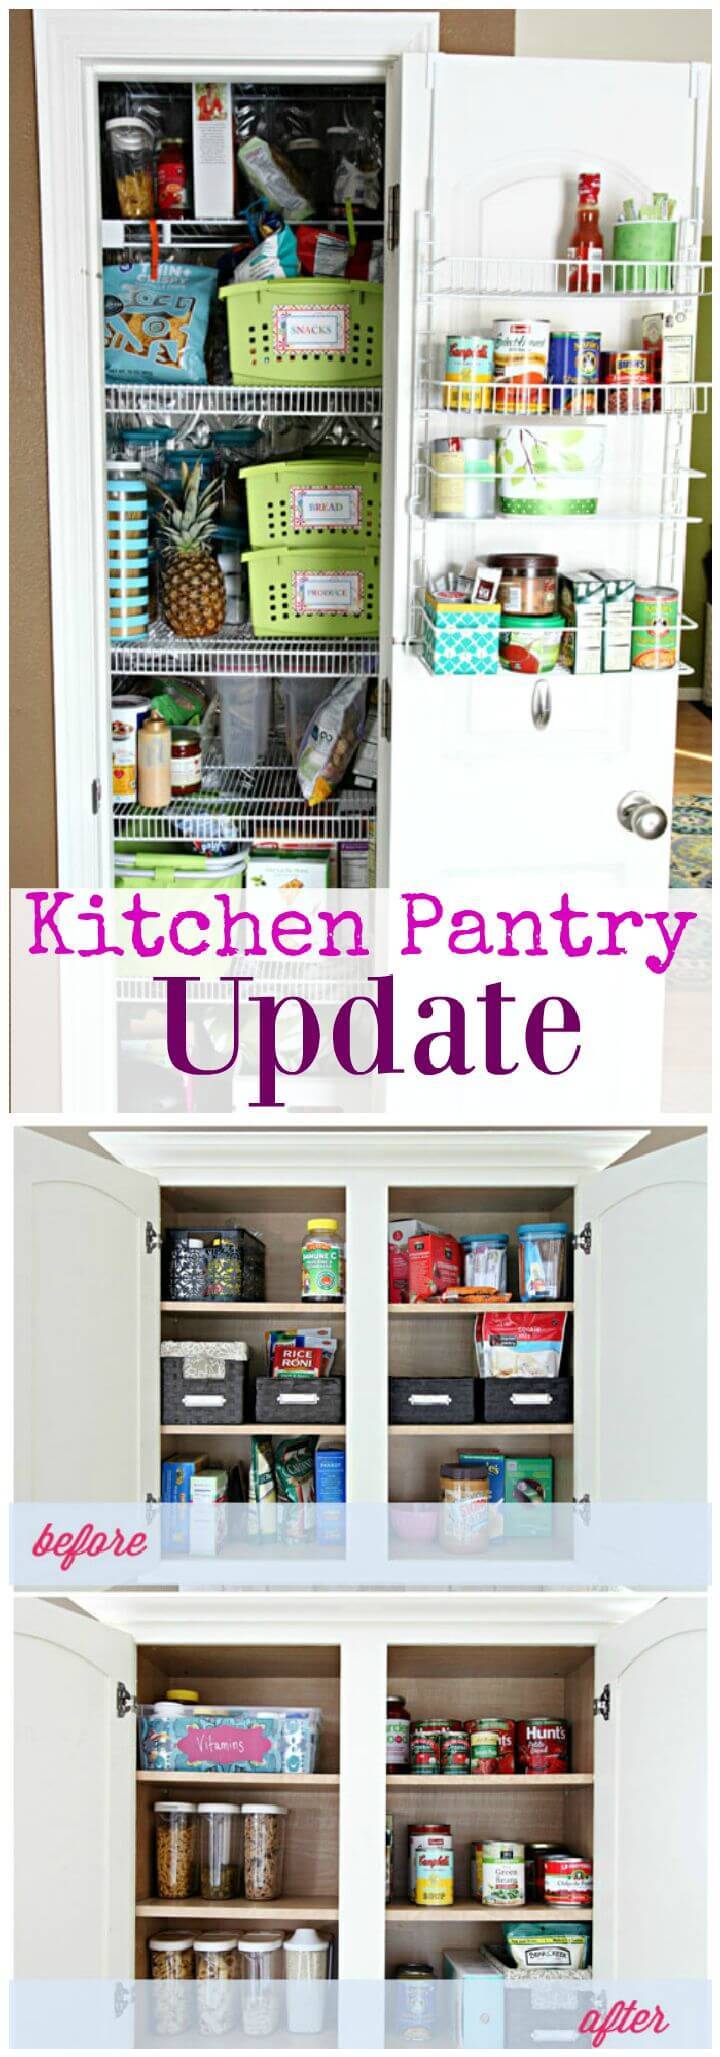 Kitchen Pantry Update